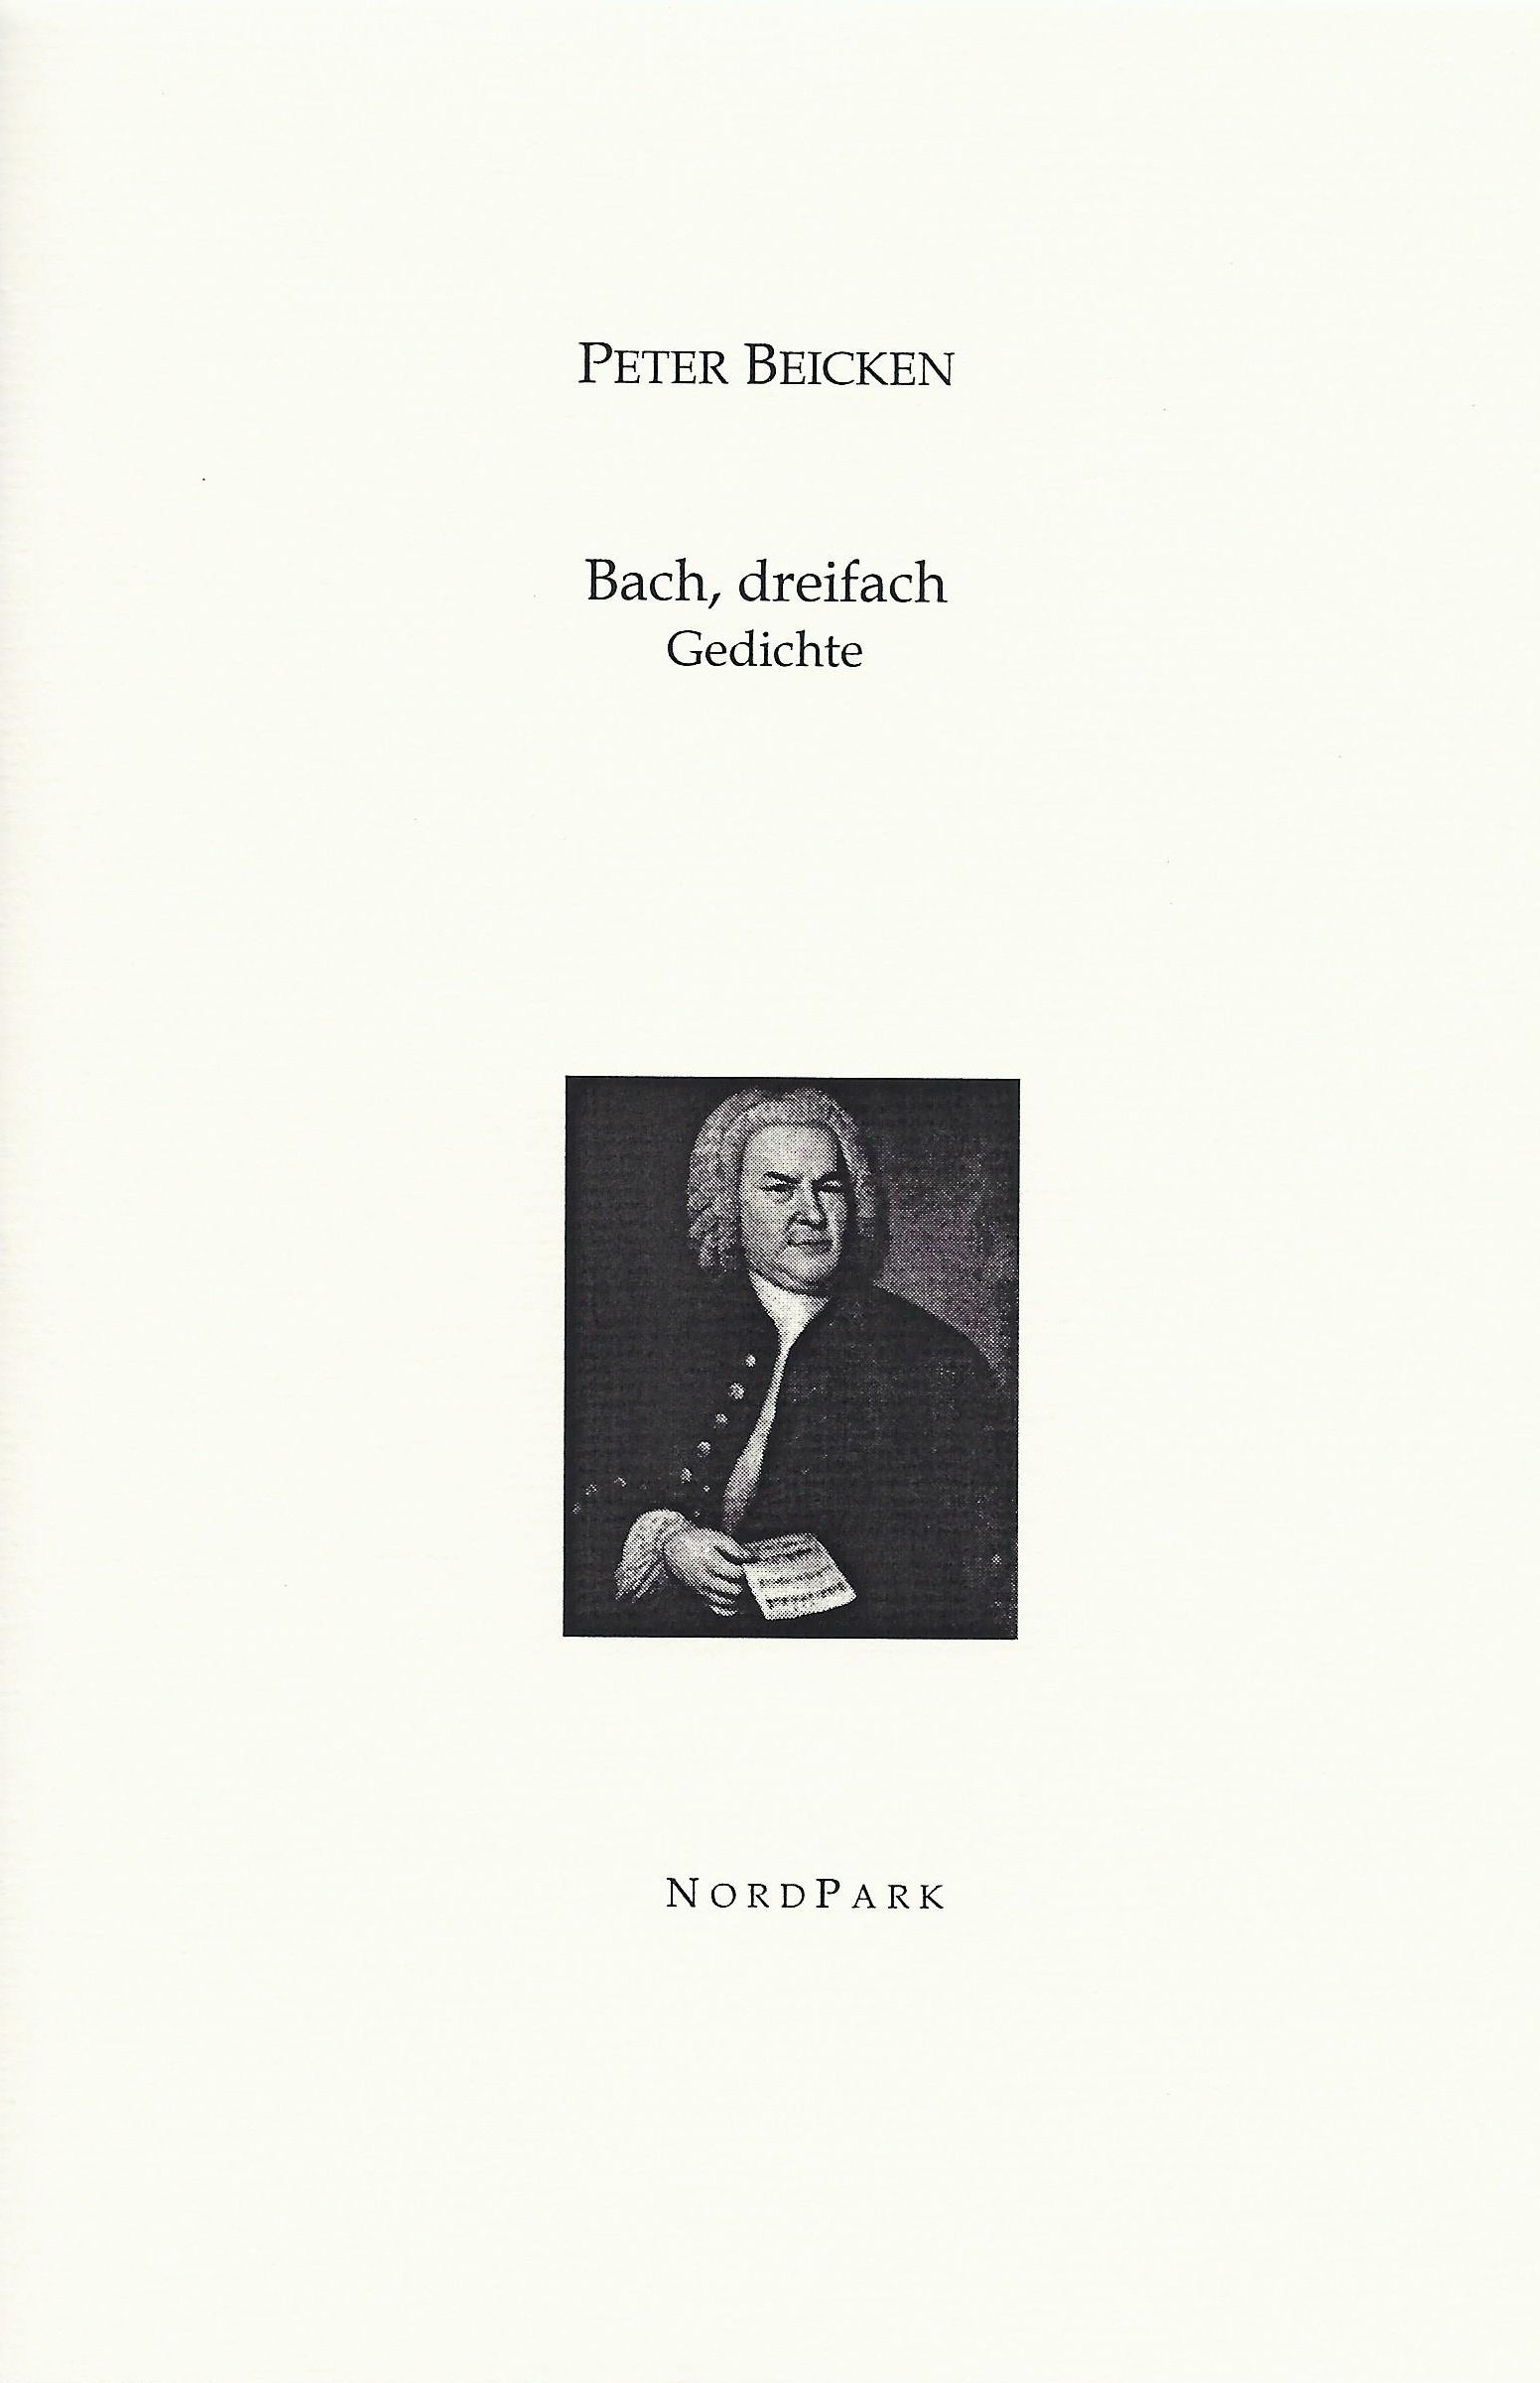 Beicken-Bach-dreifach-cover-web.jpg